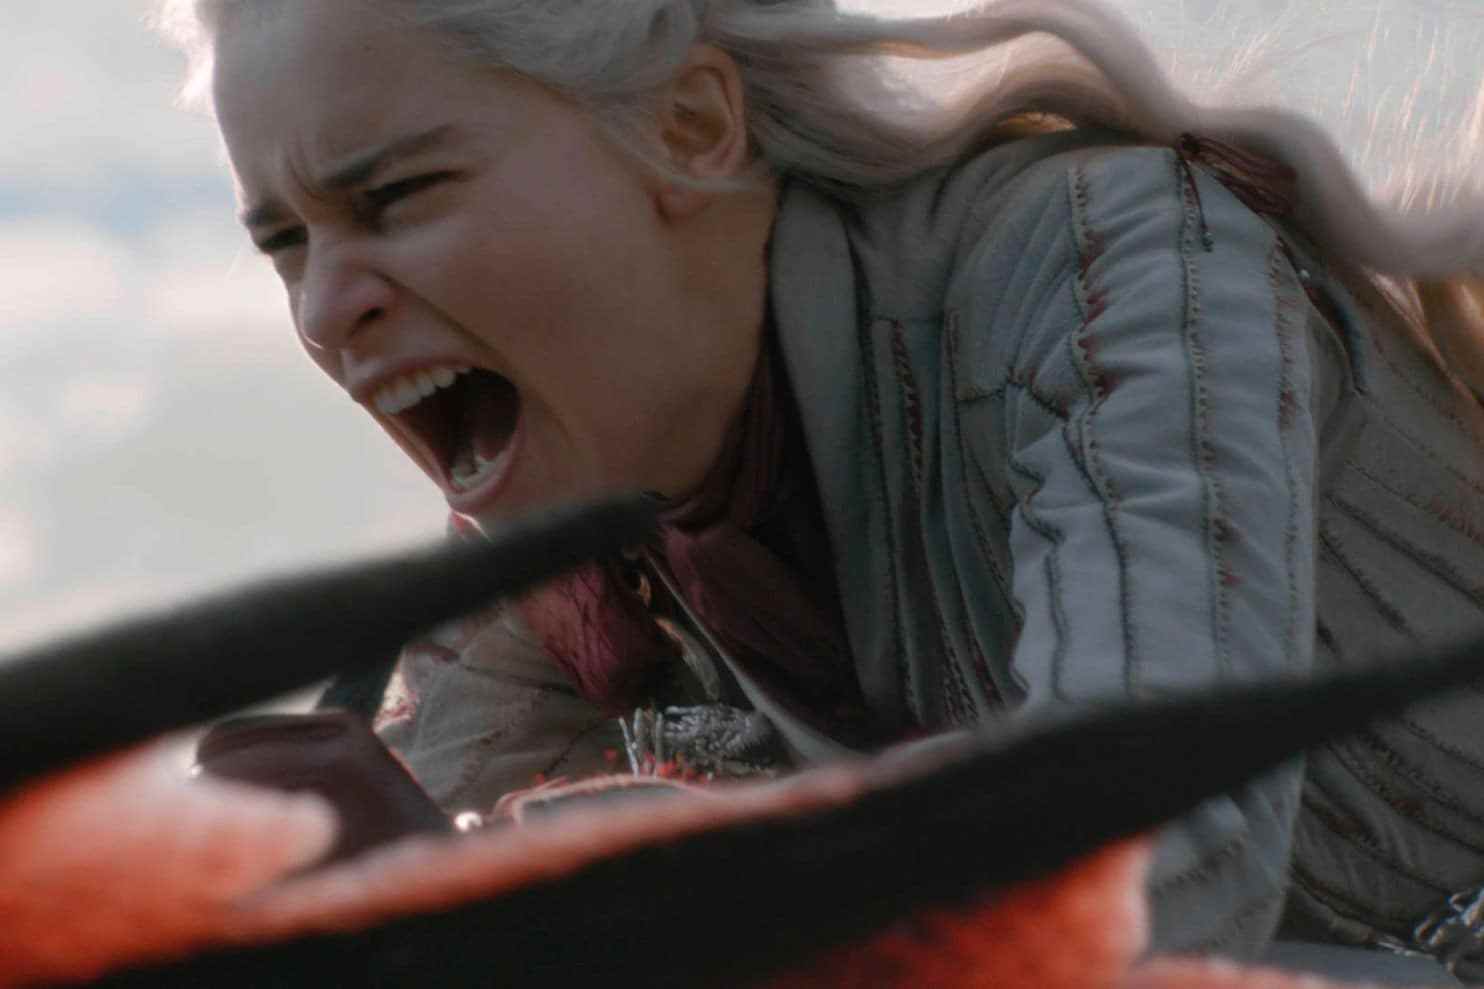 Daenerys Targaryen Emilia Clarke Game of Thrones